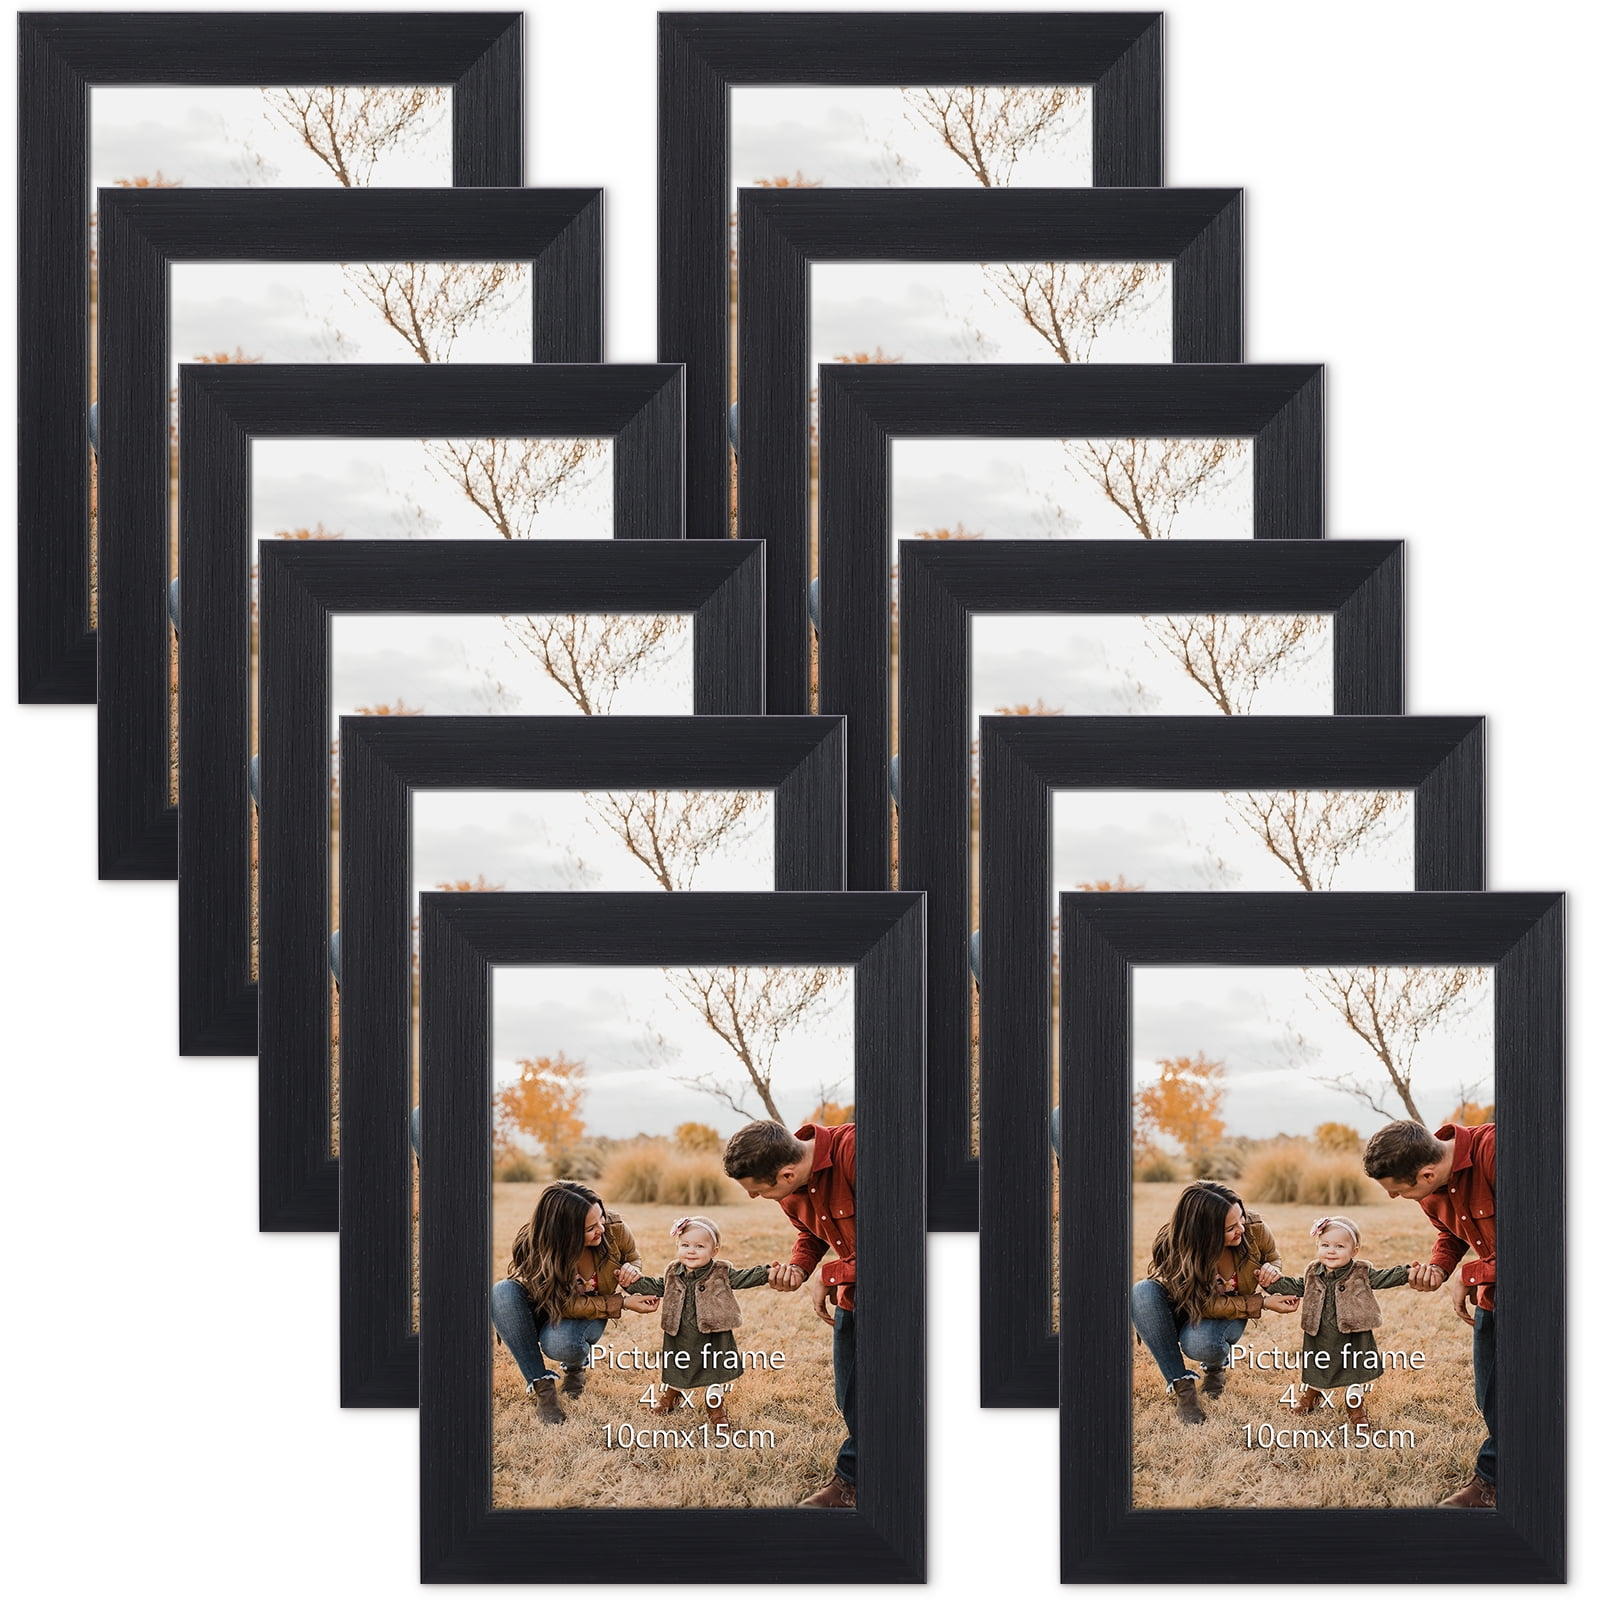 A3 light wood poster frame (30×42) - Wide